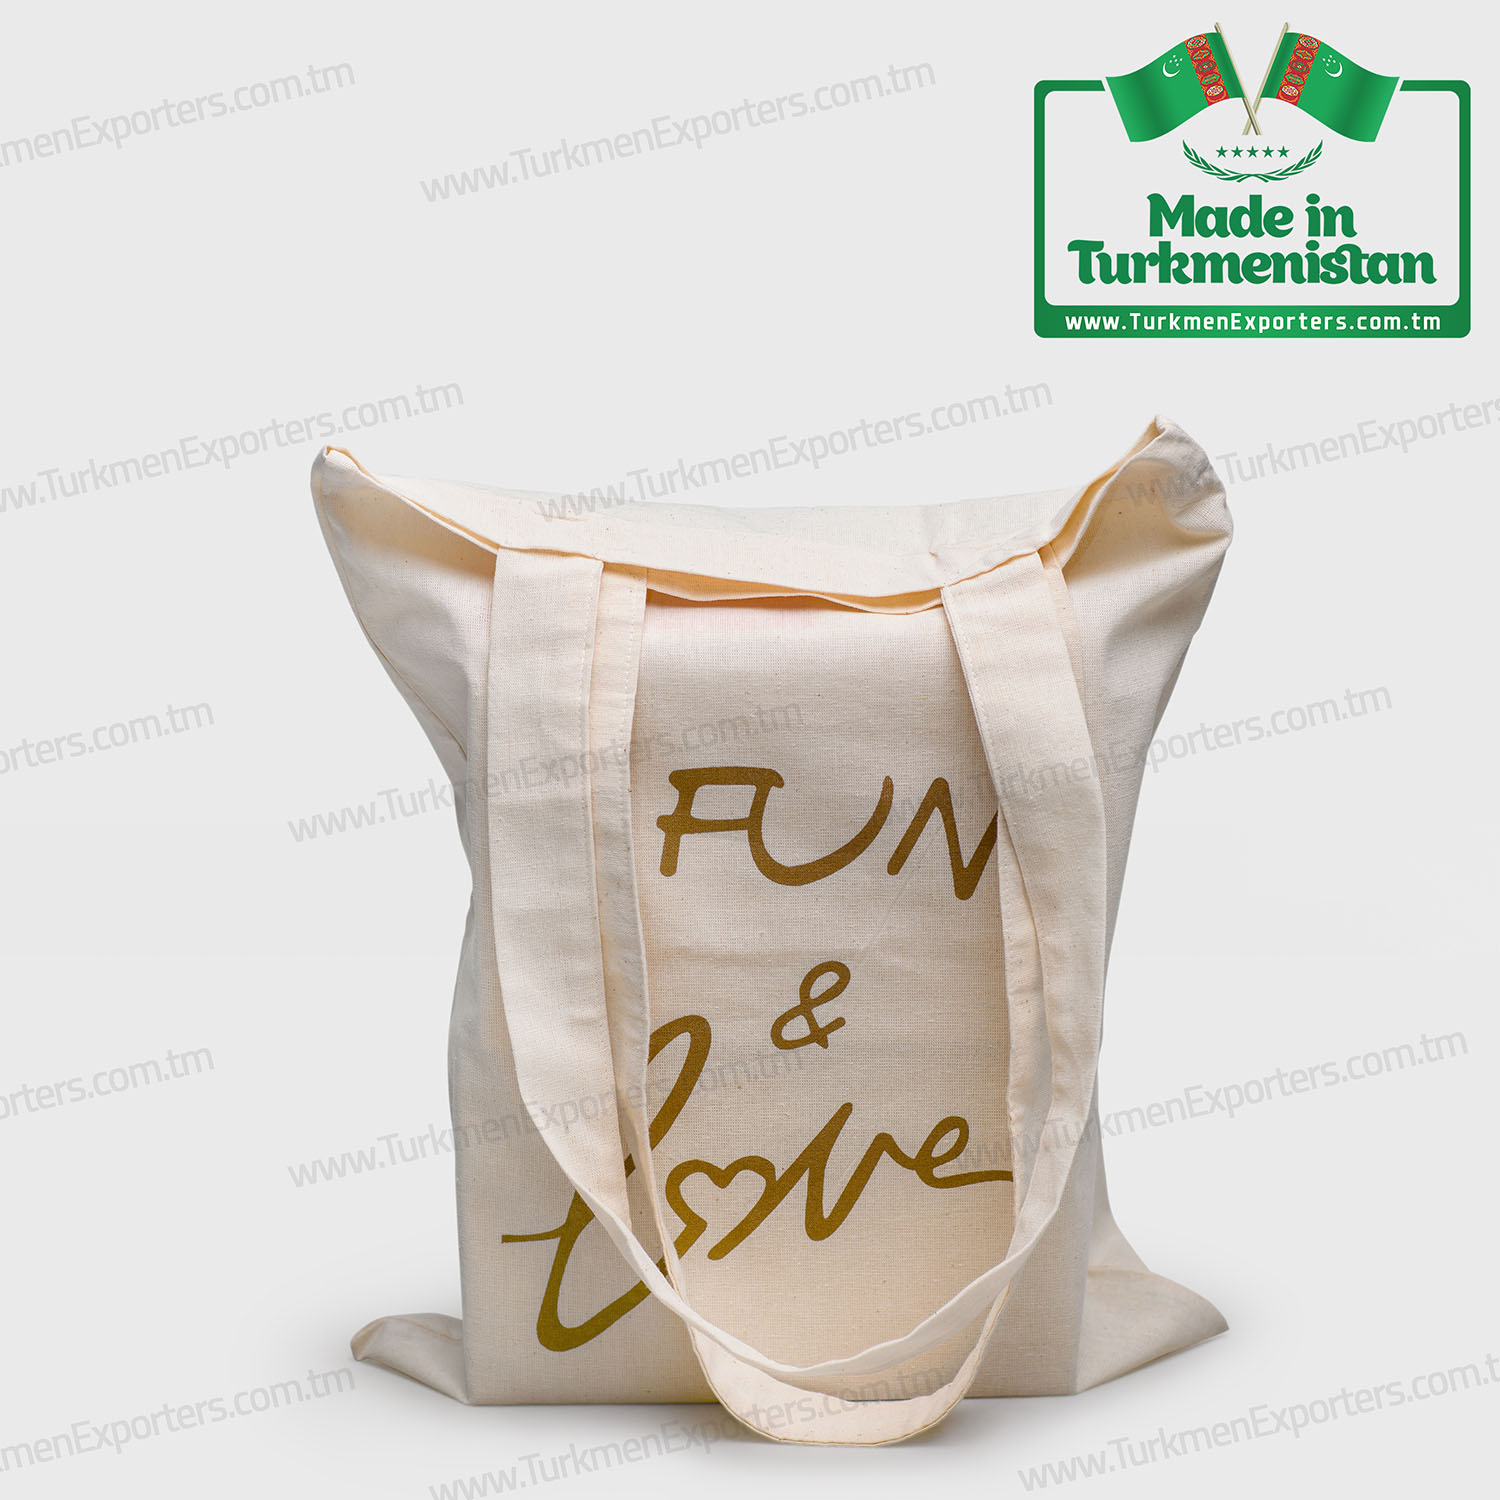 Eco cotton bag in Turkmenistan | Horjun Eco Bag